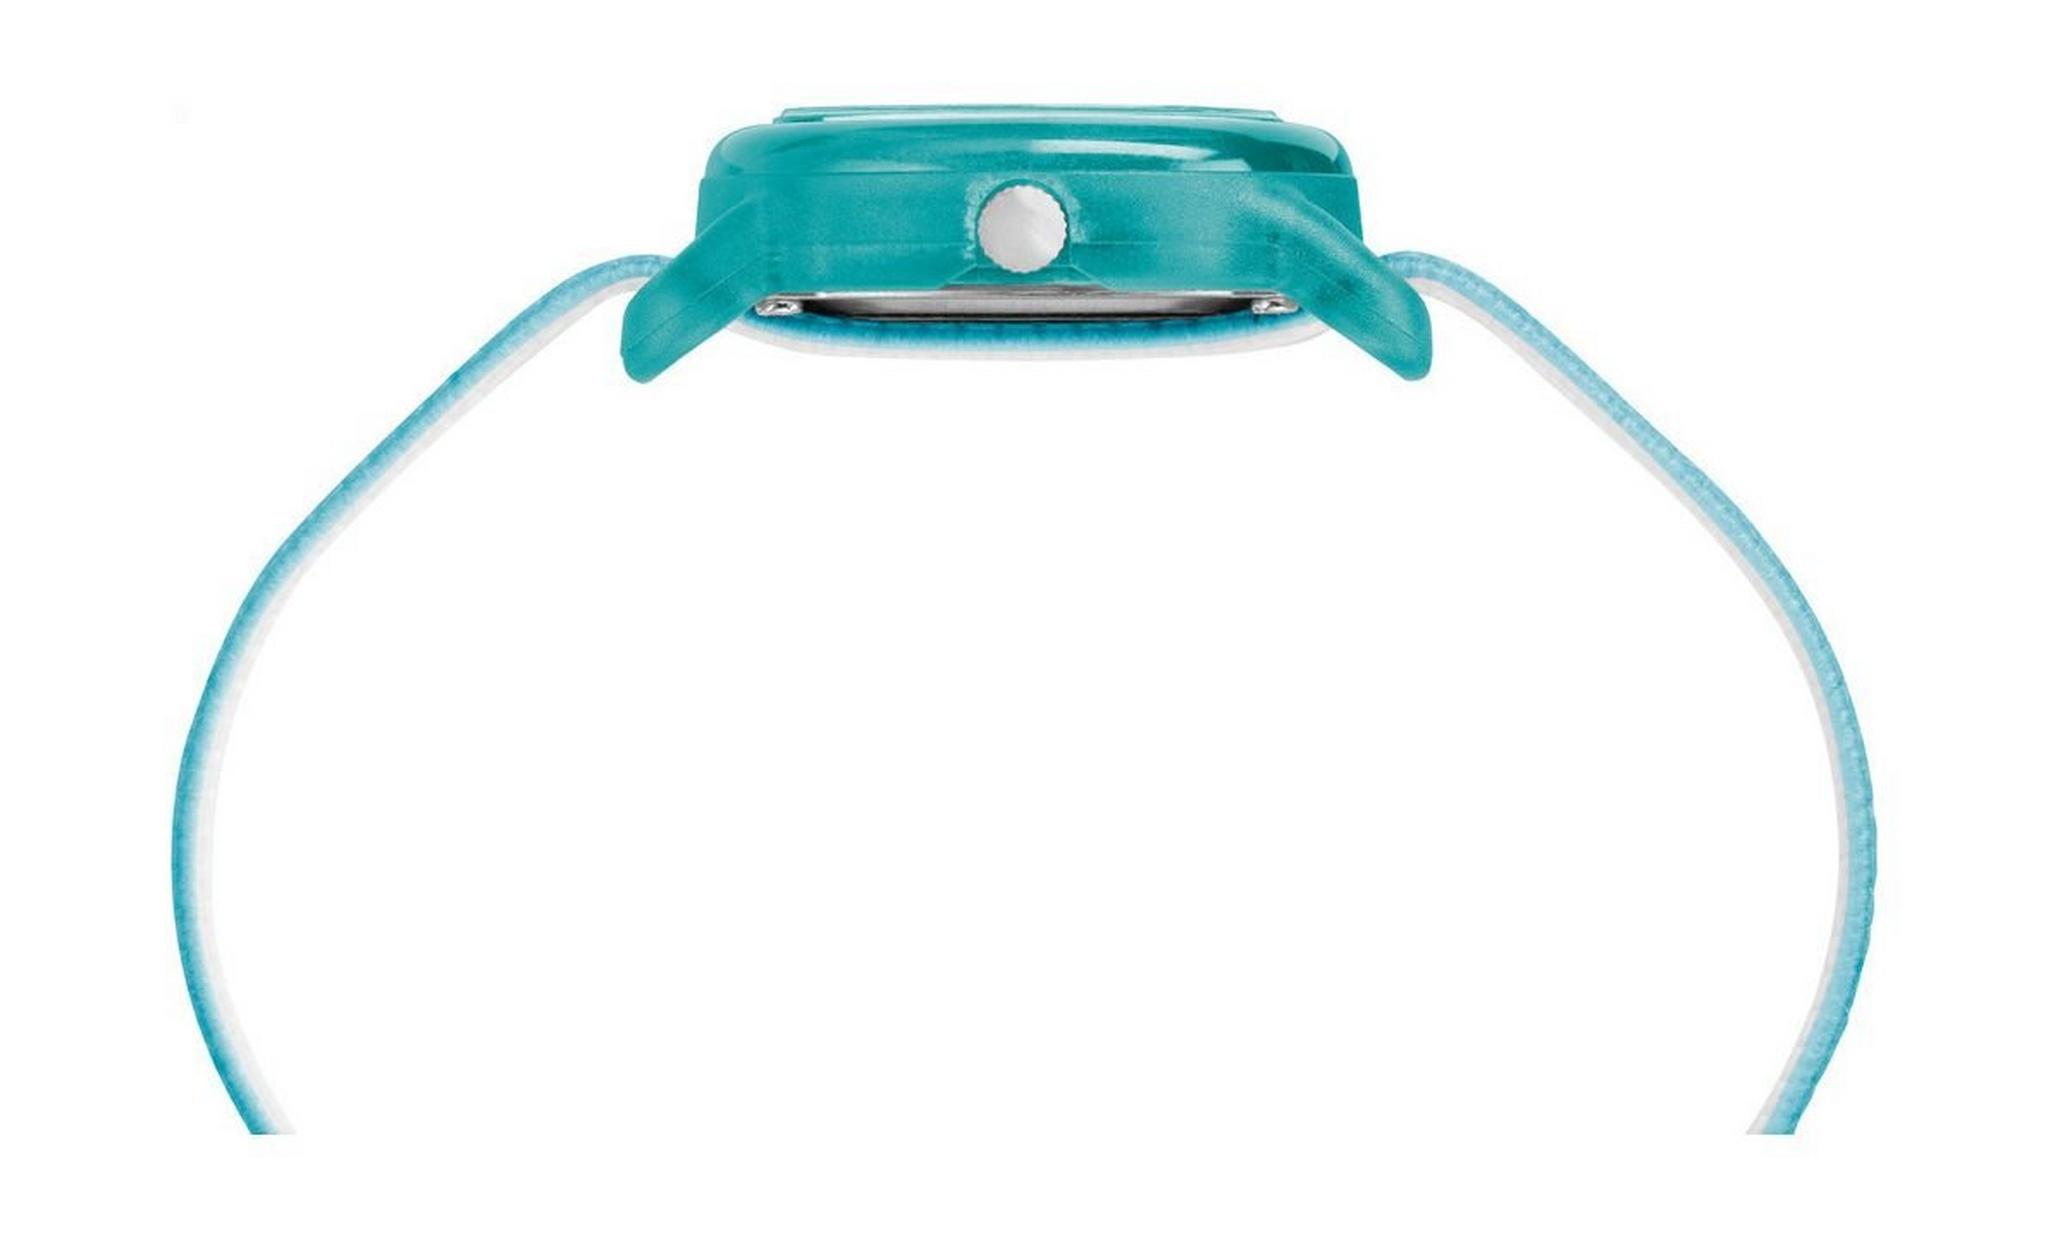 ساعة تايمكس يوث للأطفال بعرض تناظري كوارتز وحزام قماشي مطاطي – أزرق (TW7C13700)